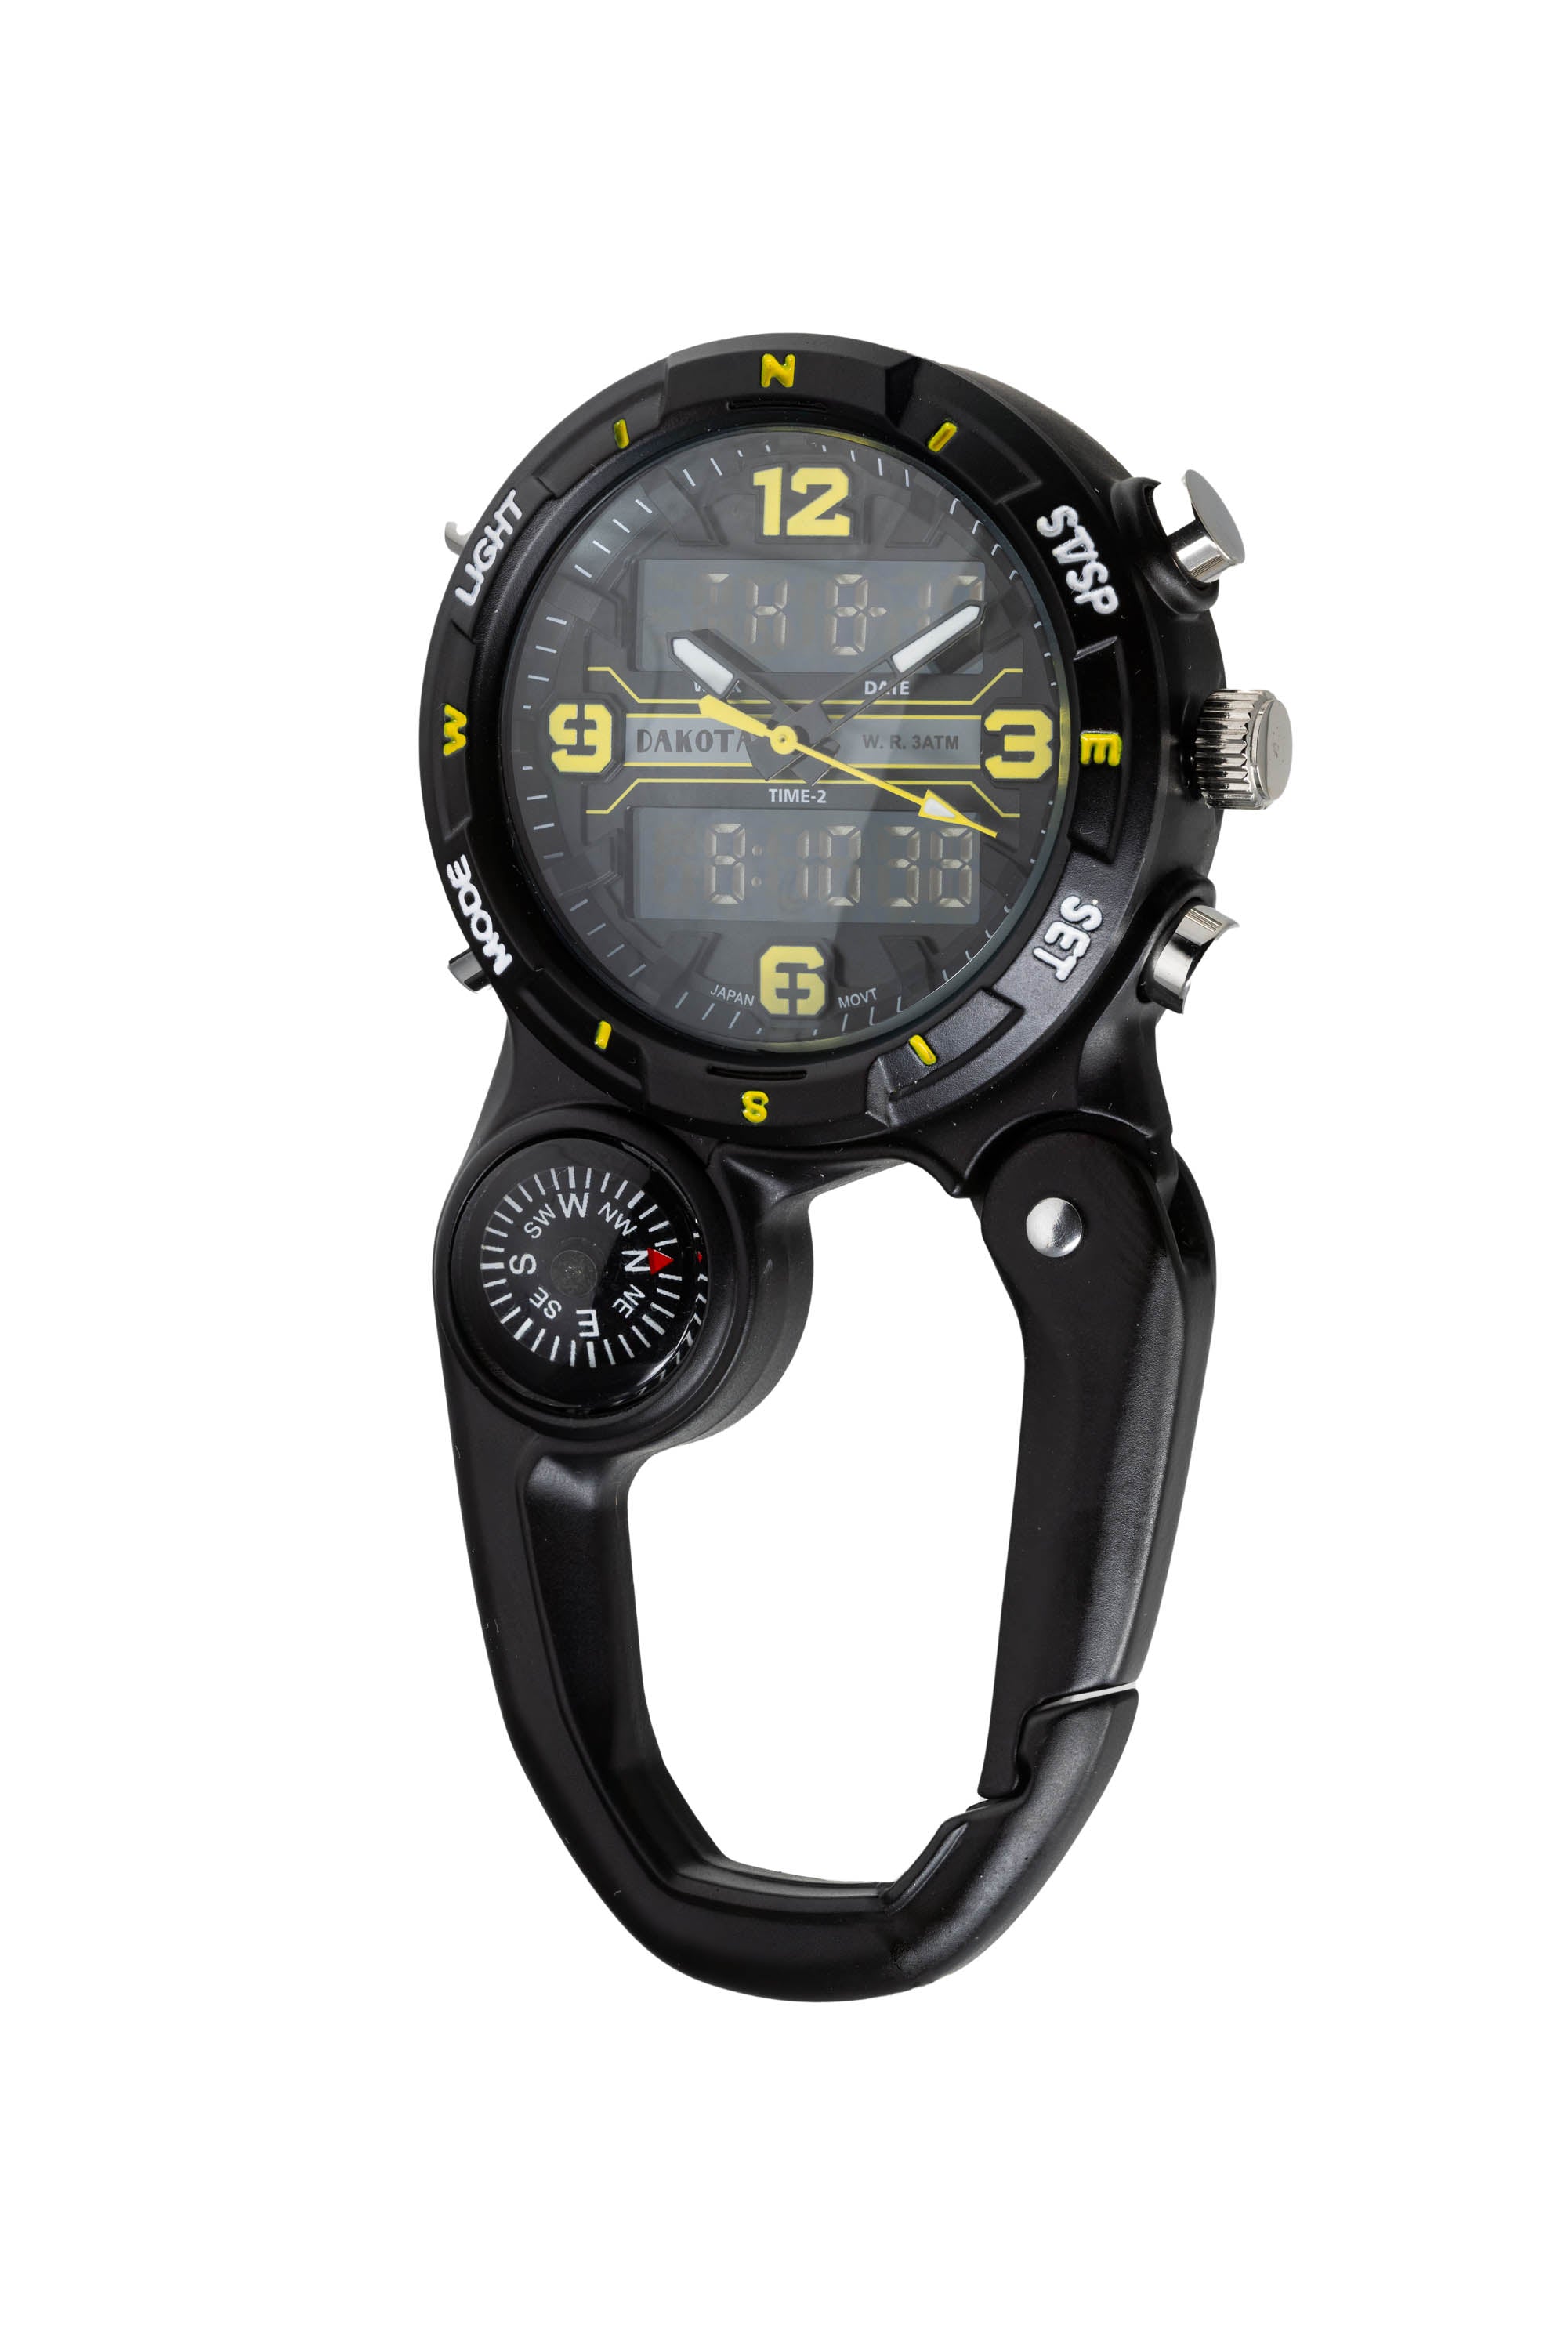 Dakota Watch Company Mini Clip Microlight Watch, Gunmetal - Walmart.com